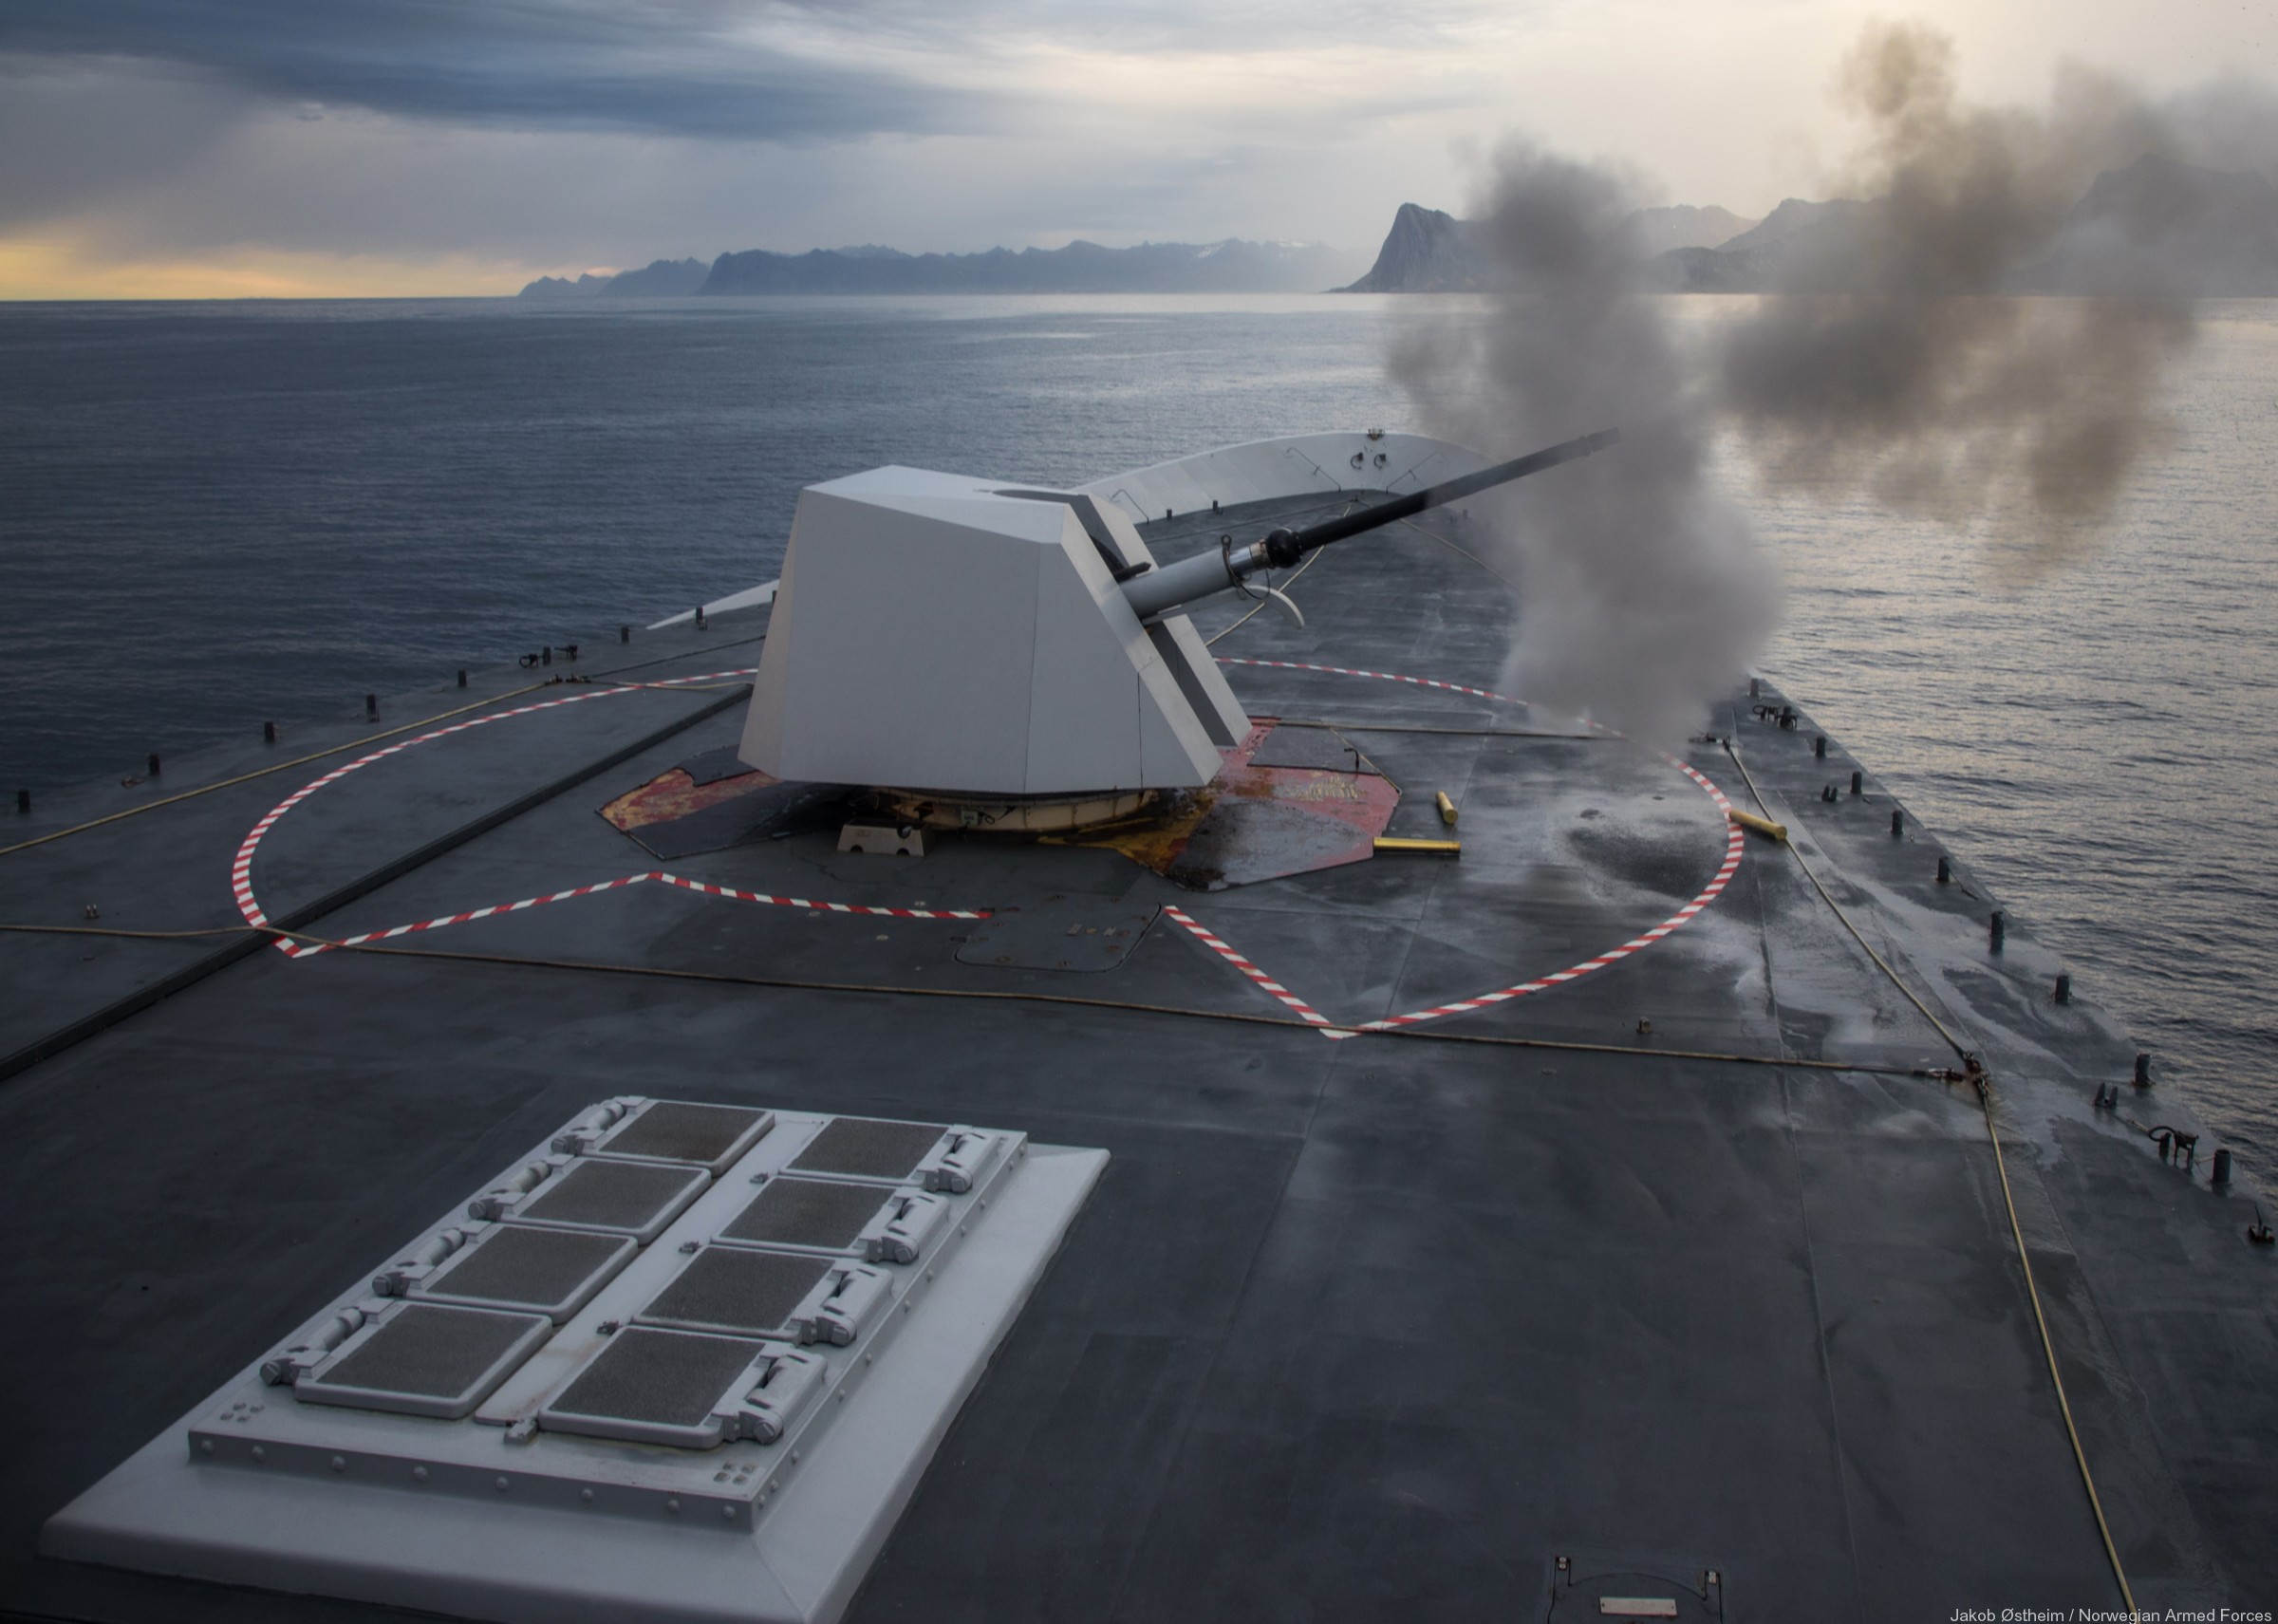 f-311 hnoms roald amundsen knm nansen class frigate royal norwegian navy sjoforsvaret 06 mk-41 vertical launching system vls essm